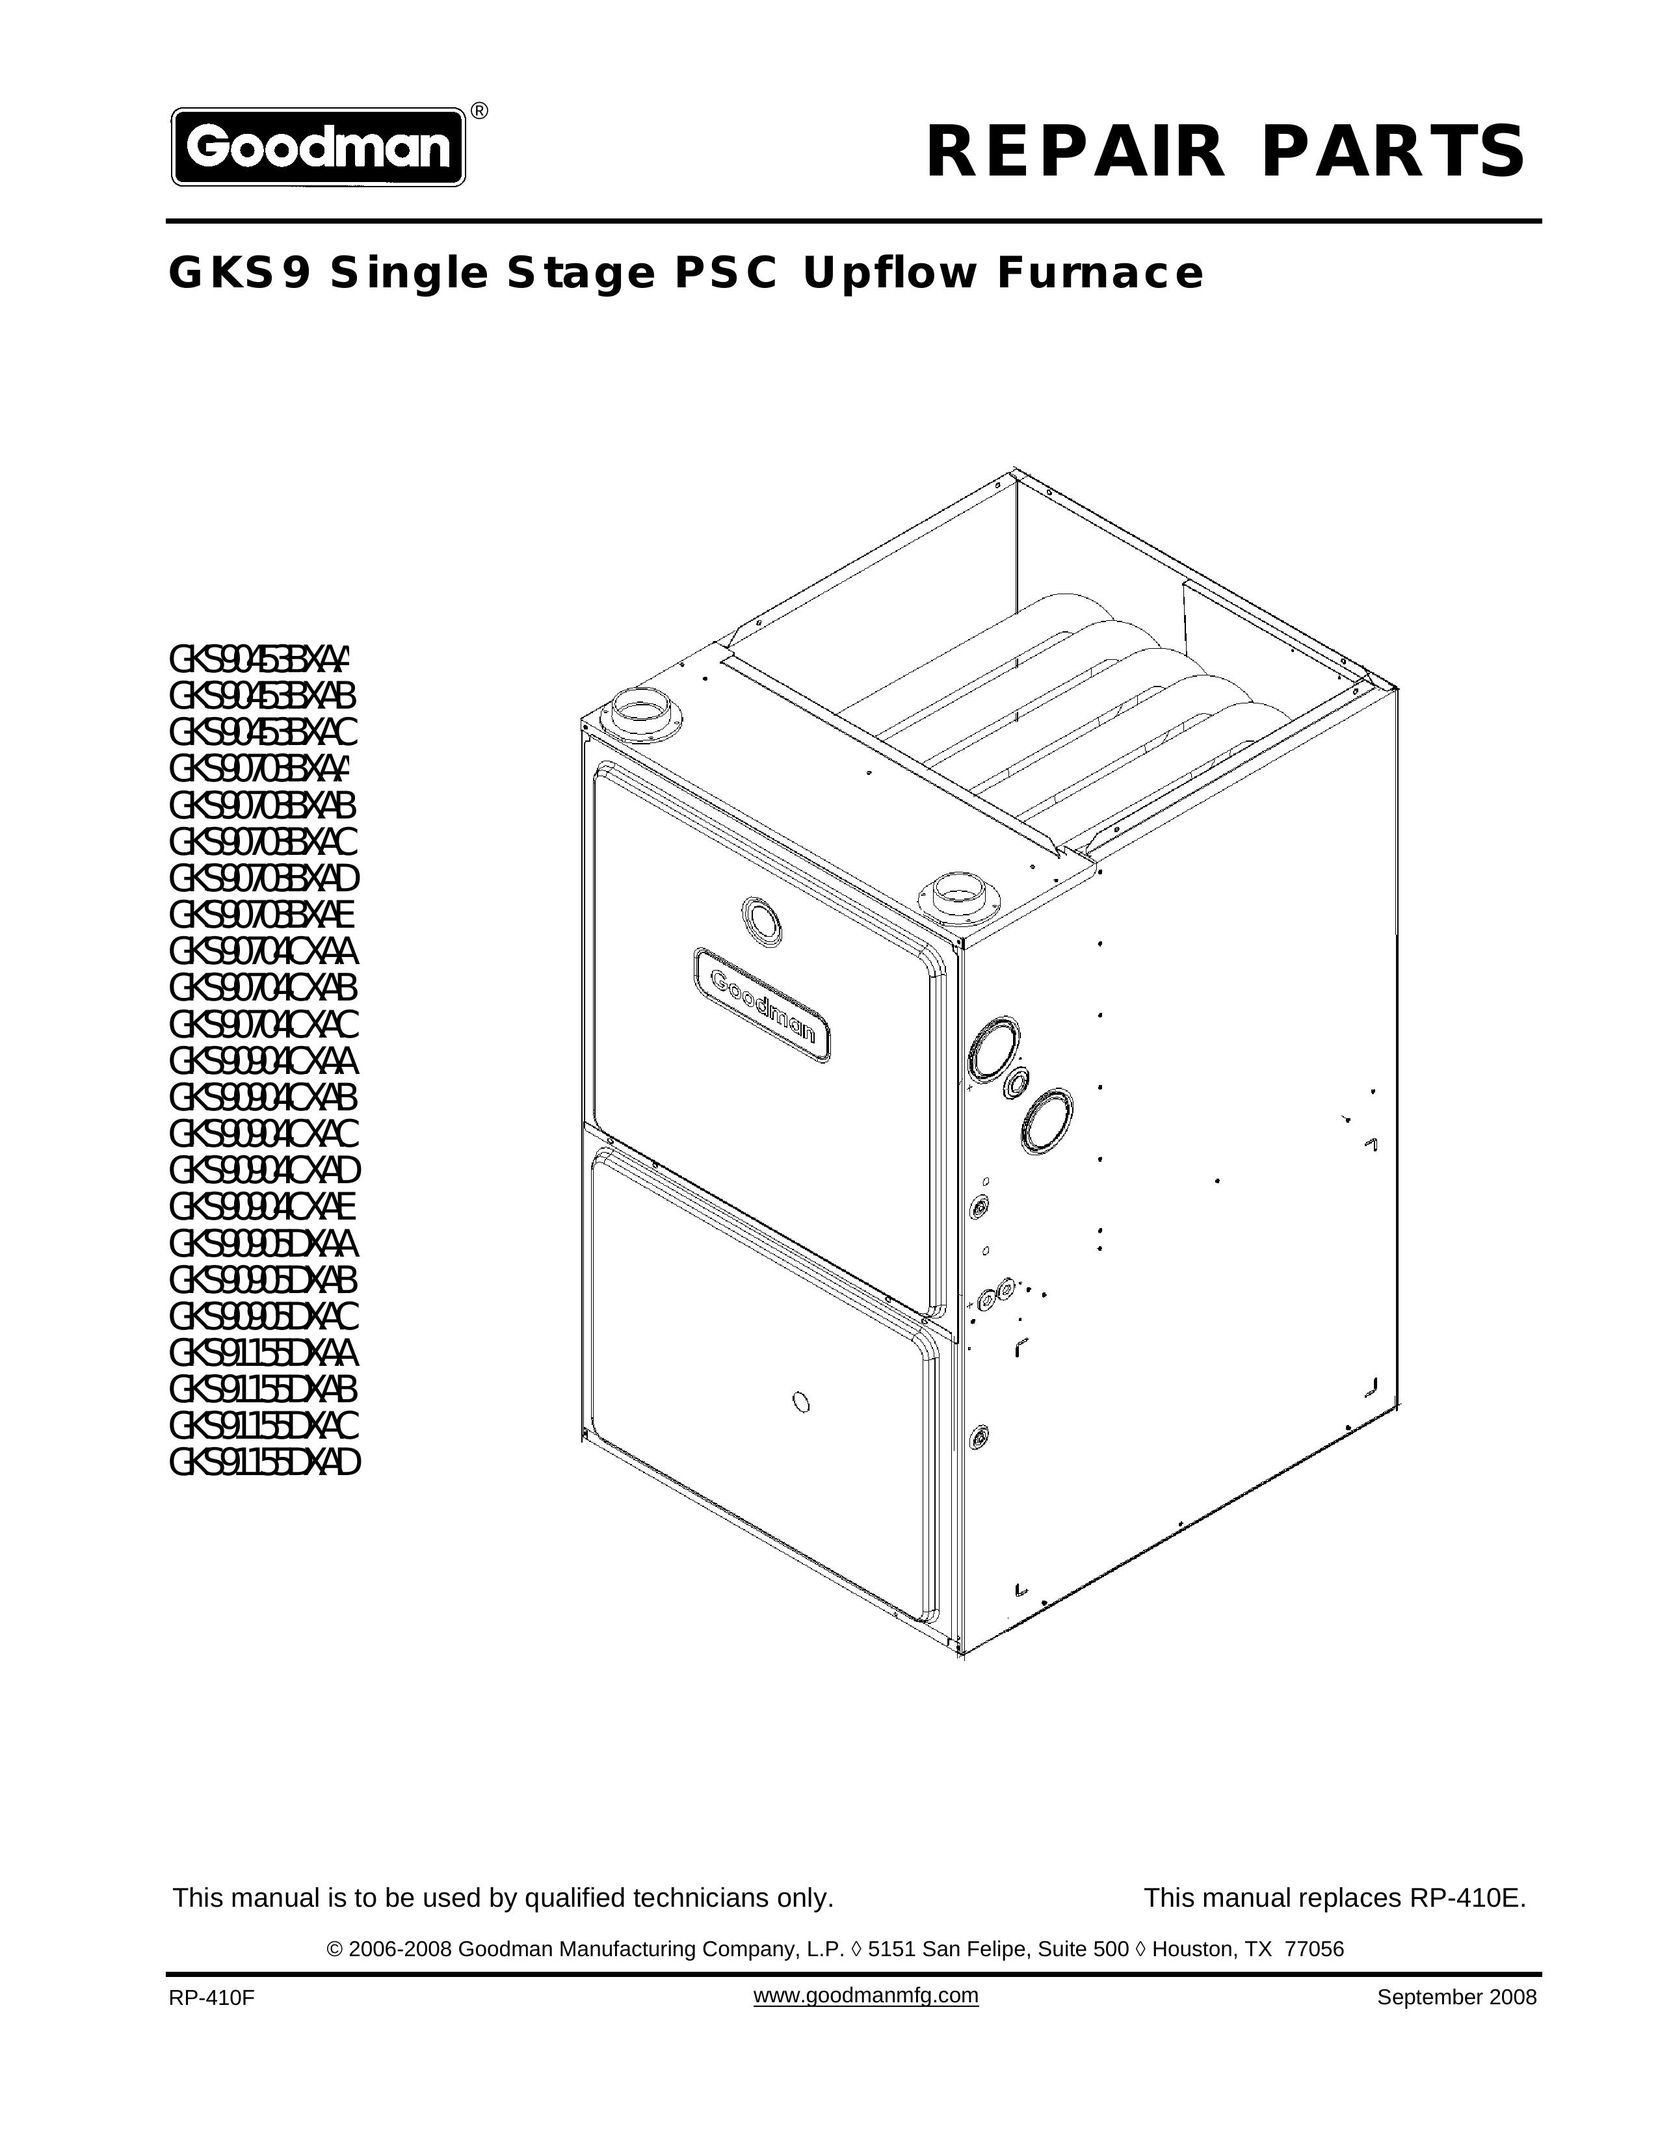 Goodman Mfg GKS90703BXAB Furnace User Manual